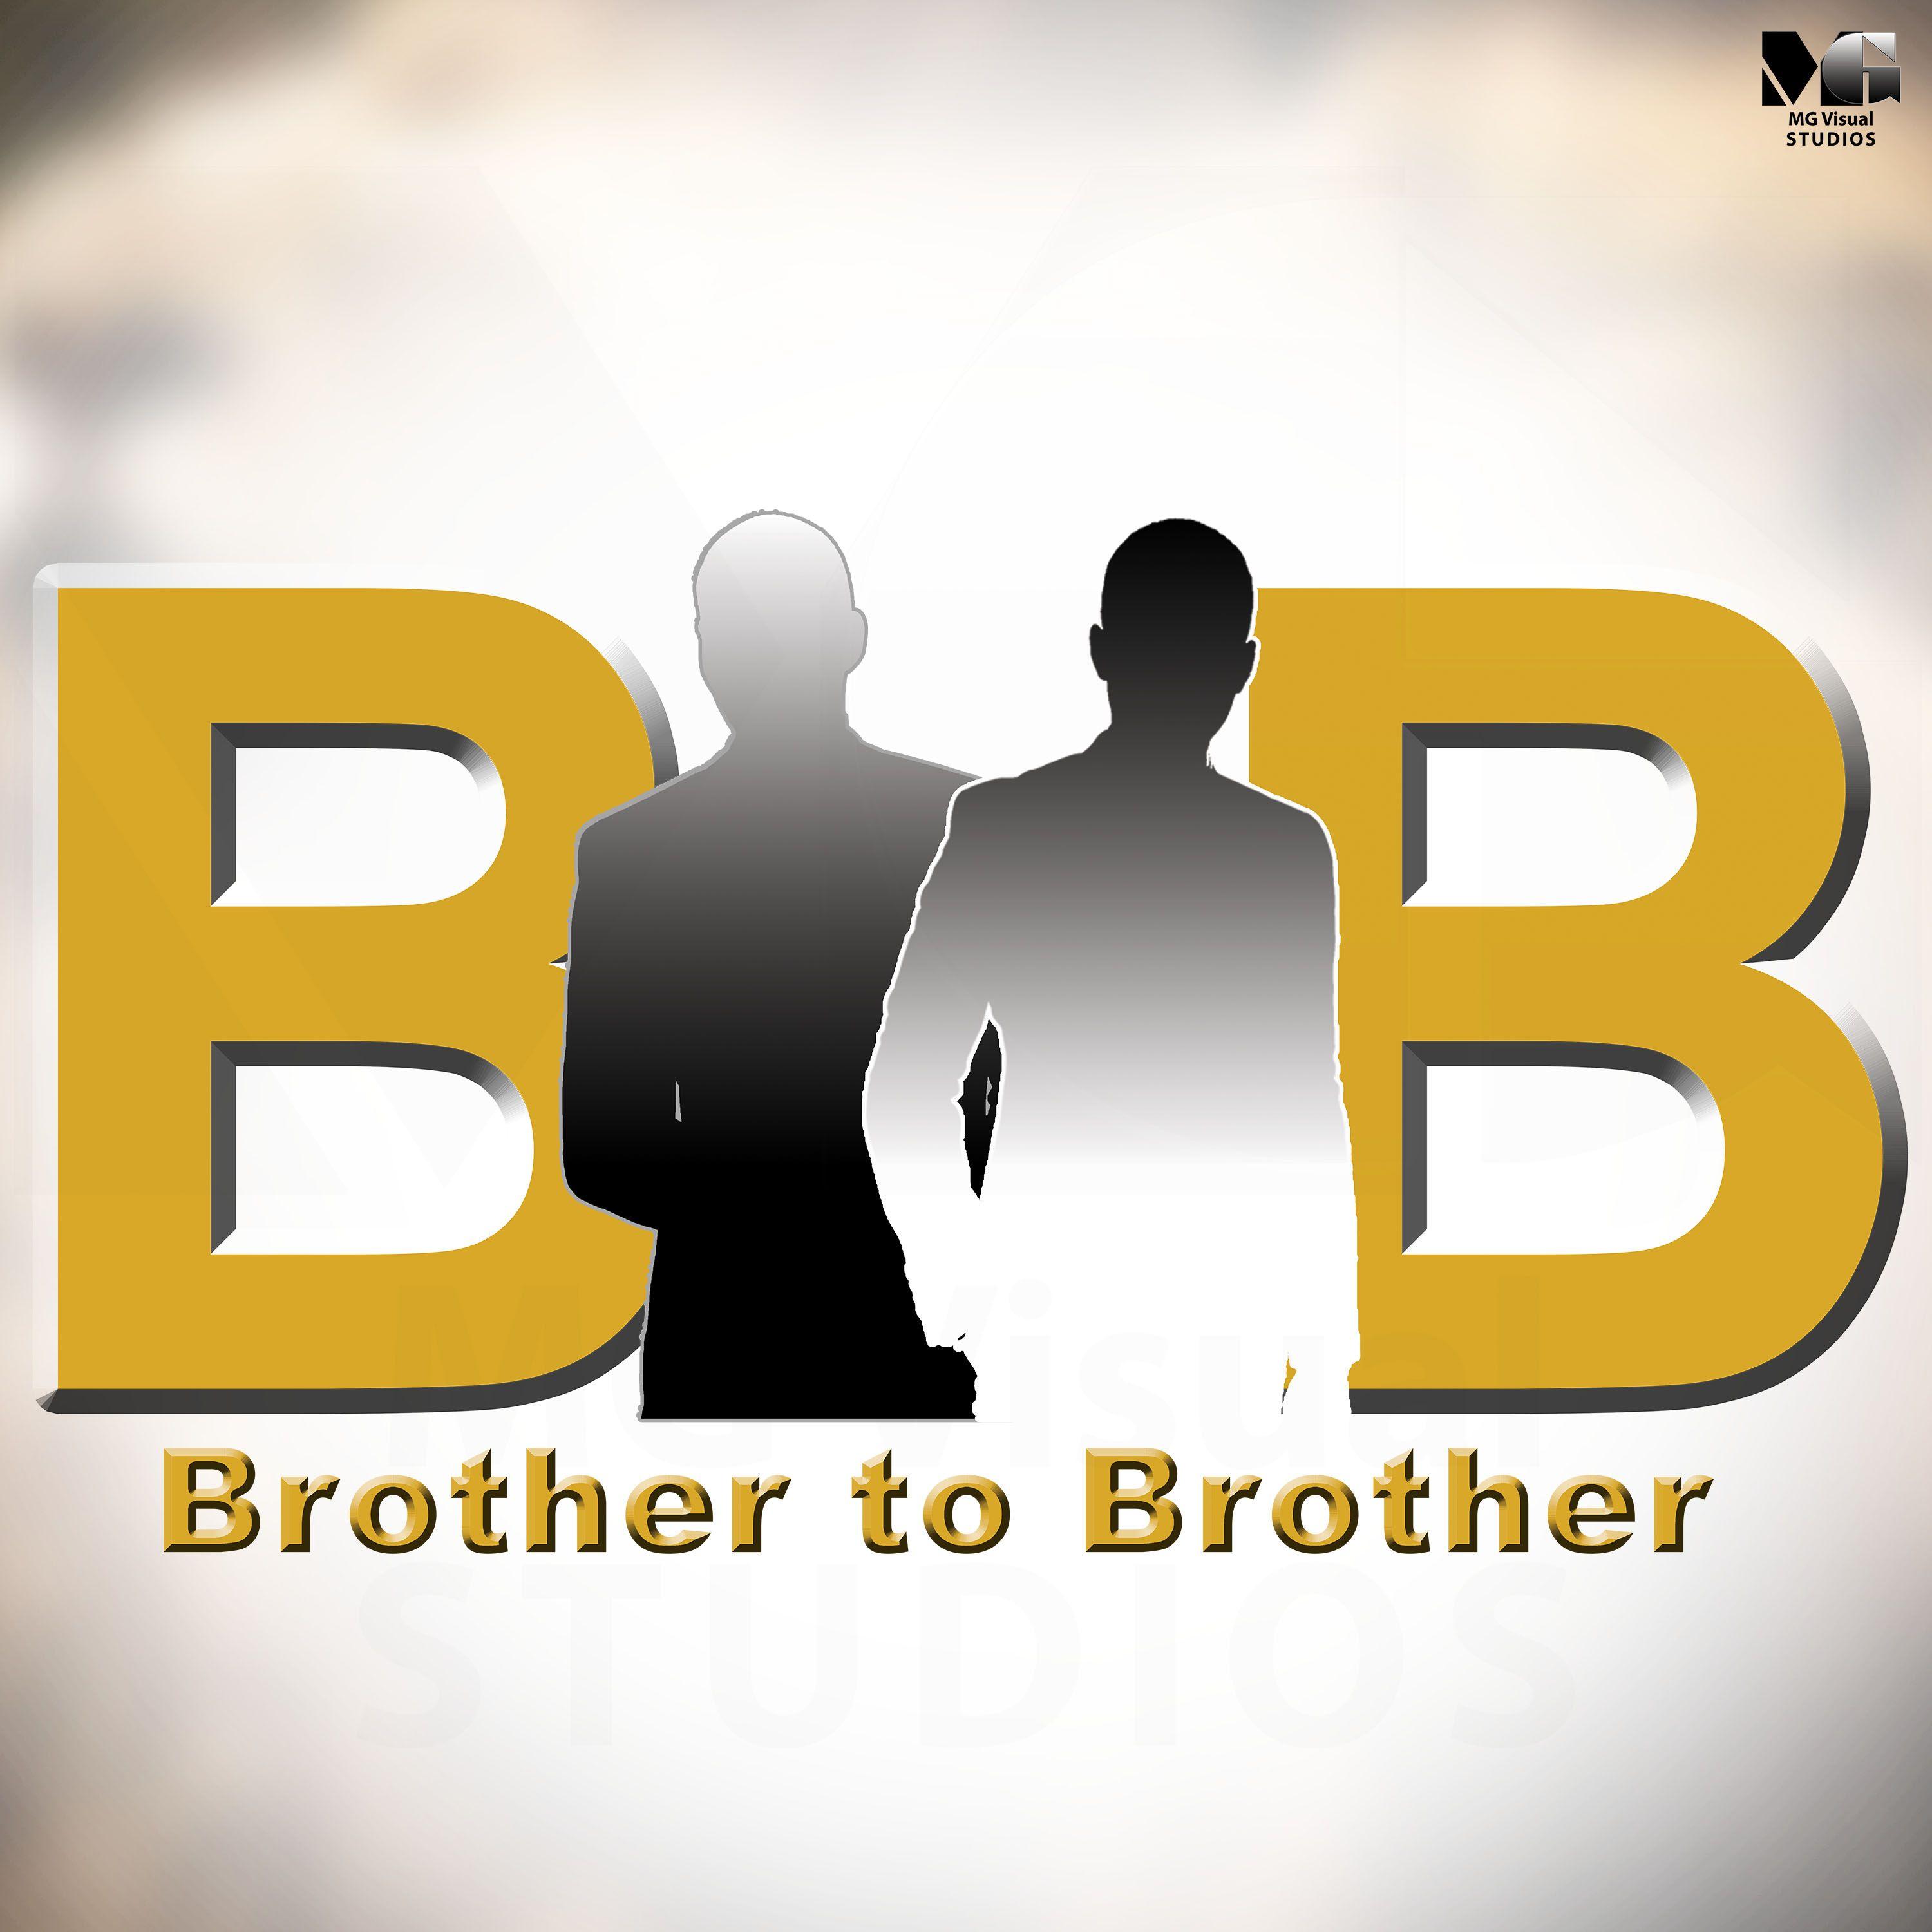 Brother Logo - Promotional Material. MG Visual Studios